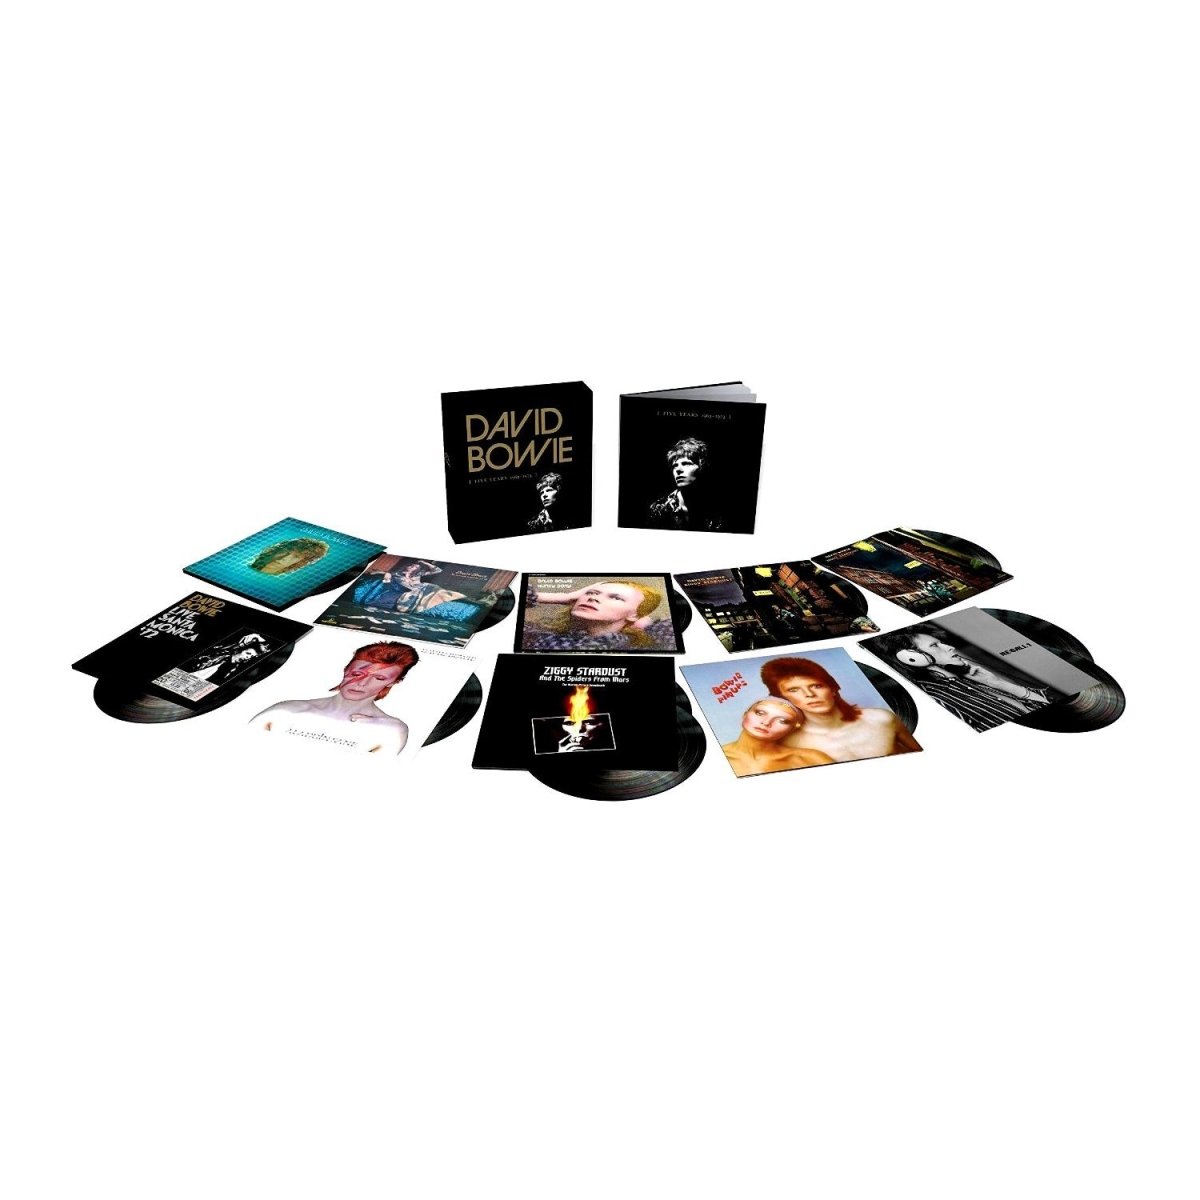 David Bowie - [Five Years 1969 - 1973] Vinyl Box Set Vinyl